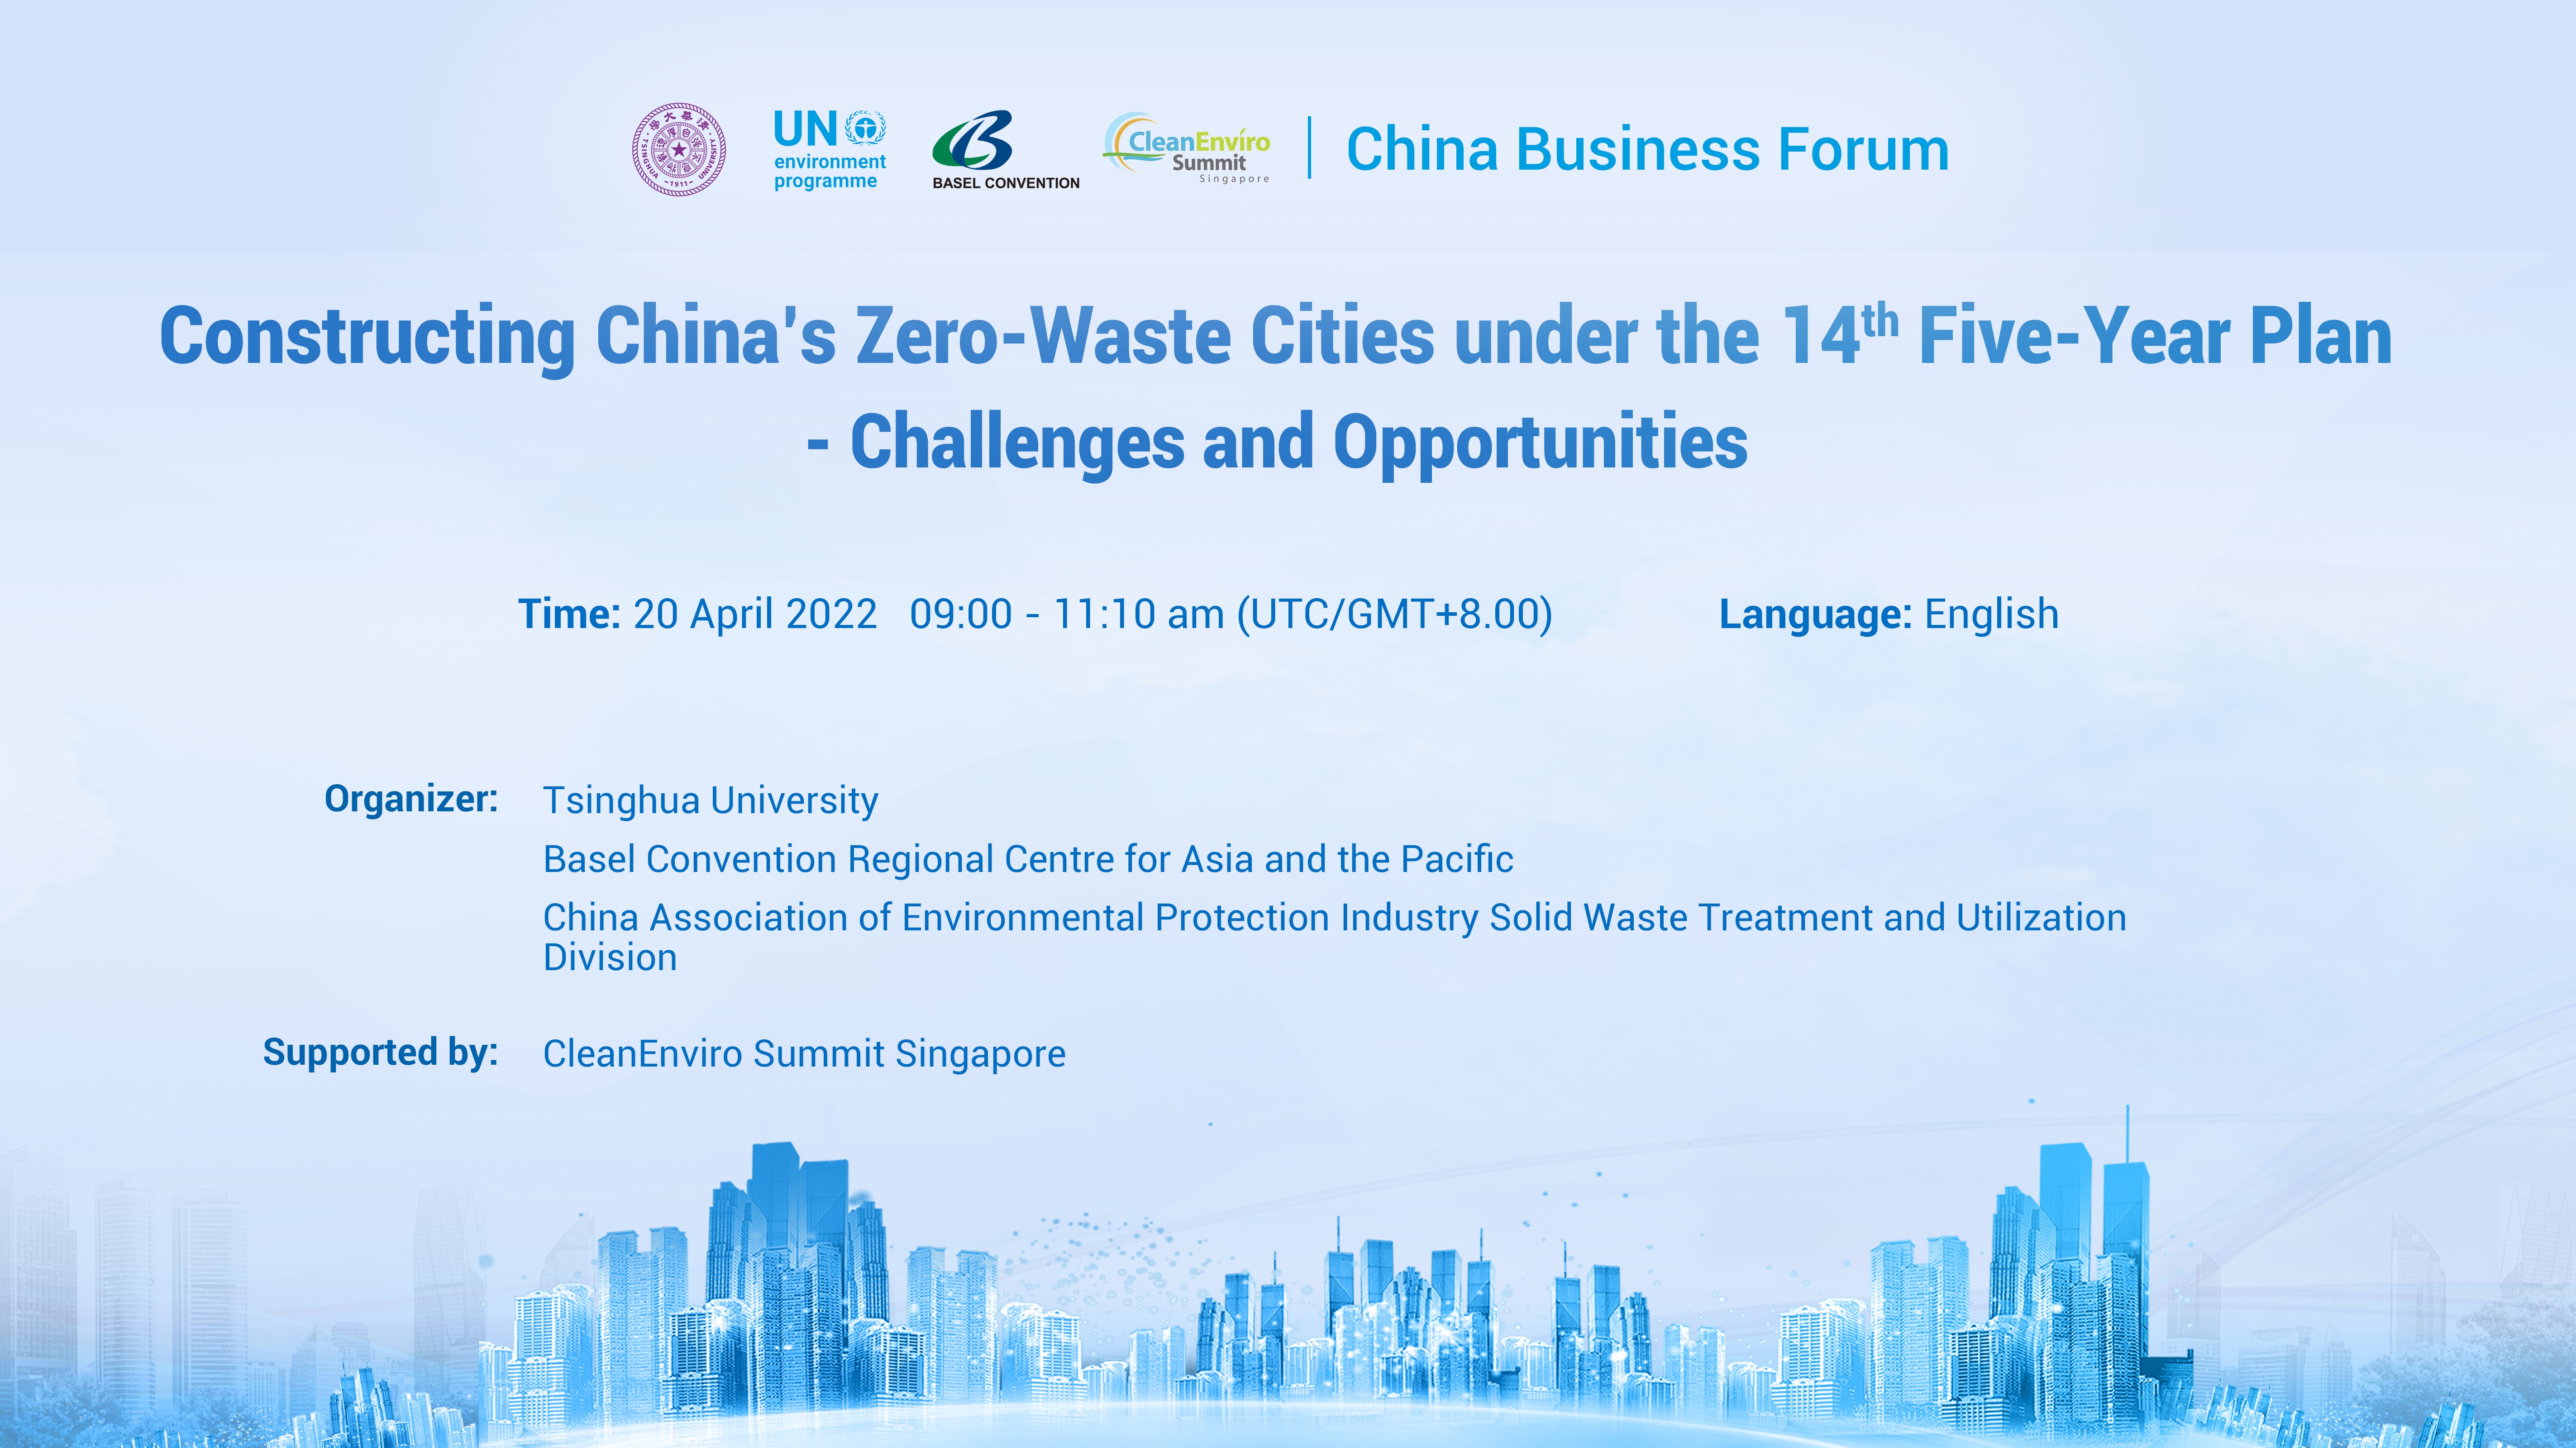 China Business Forum 2022 Details